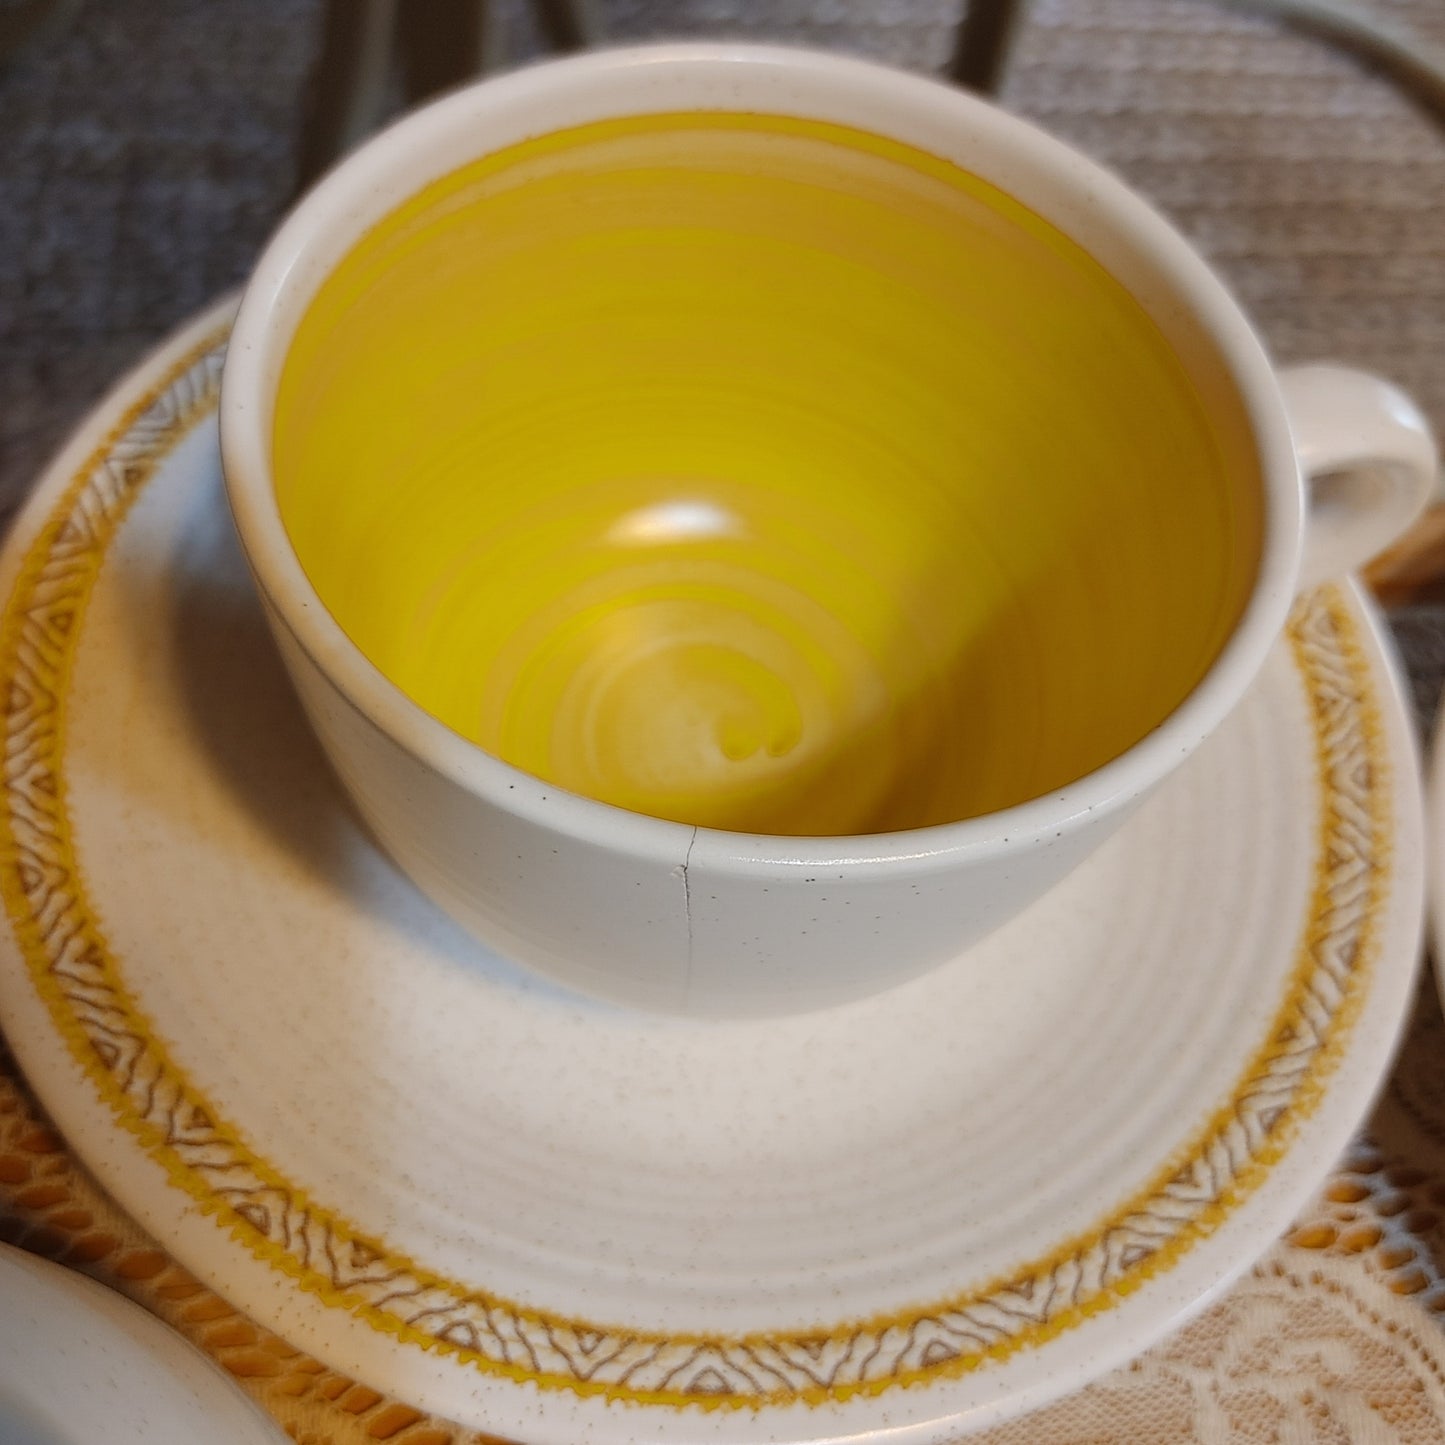 Franciscan Earthenware Vintage Hacienda Gold Coffee Tea Service 8(7) Free Ship!